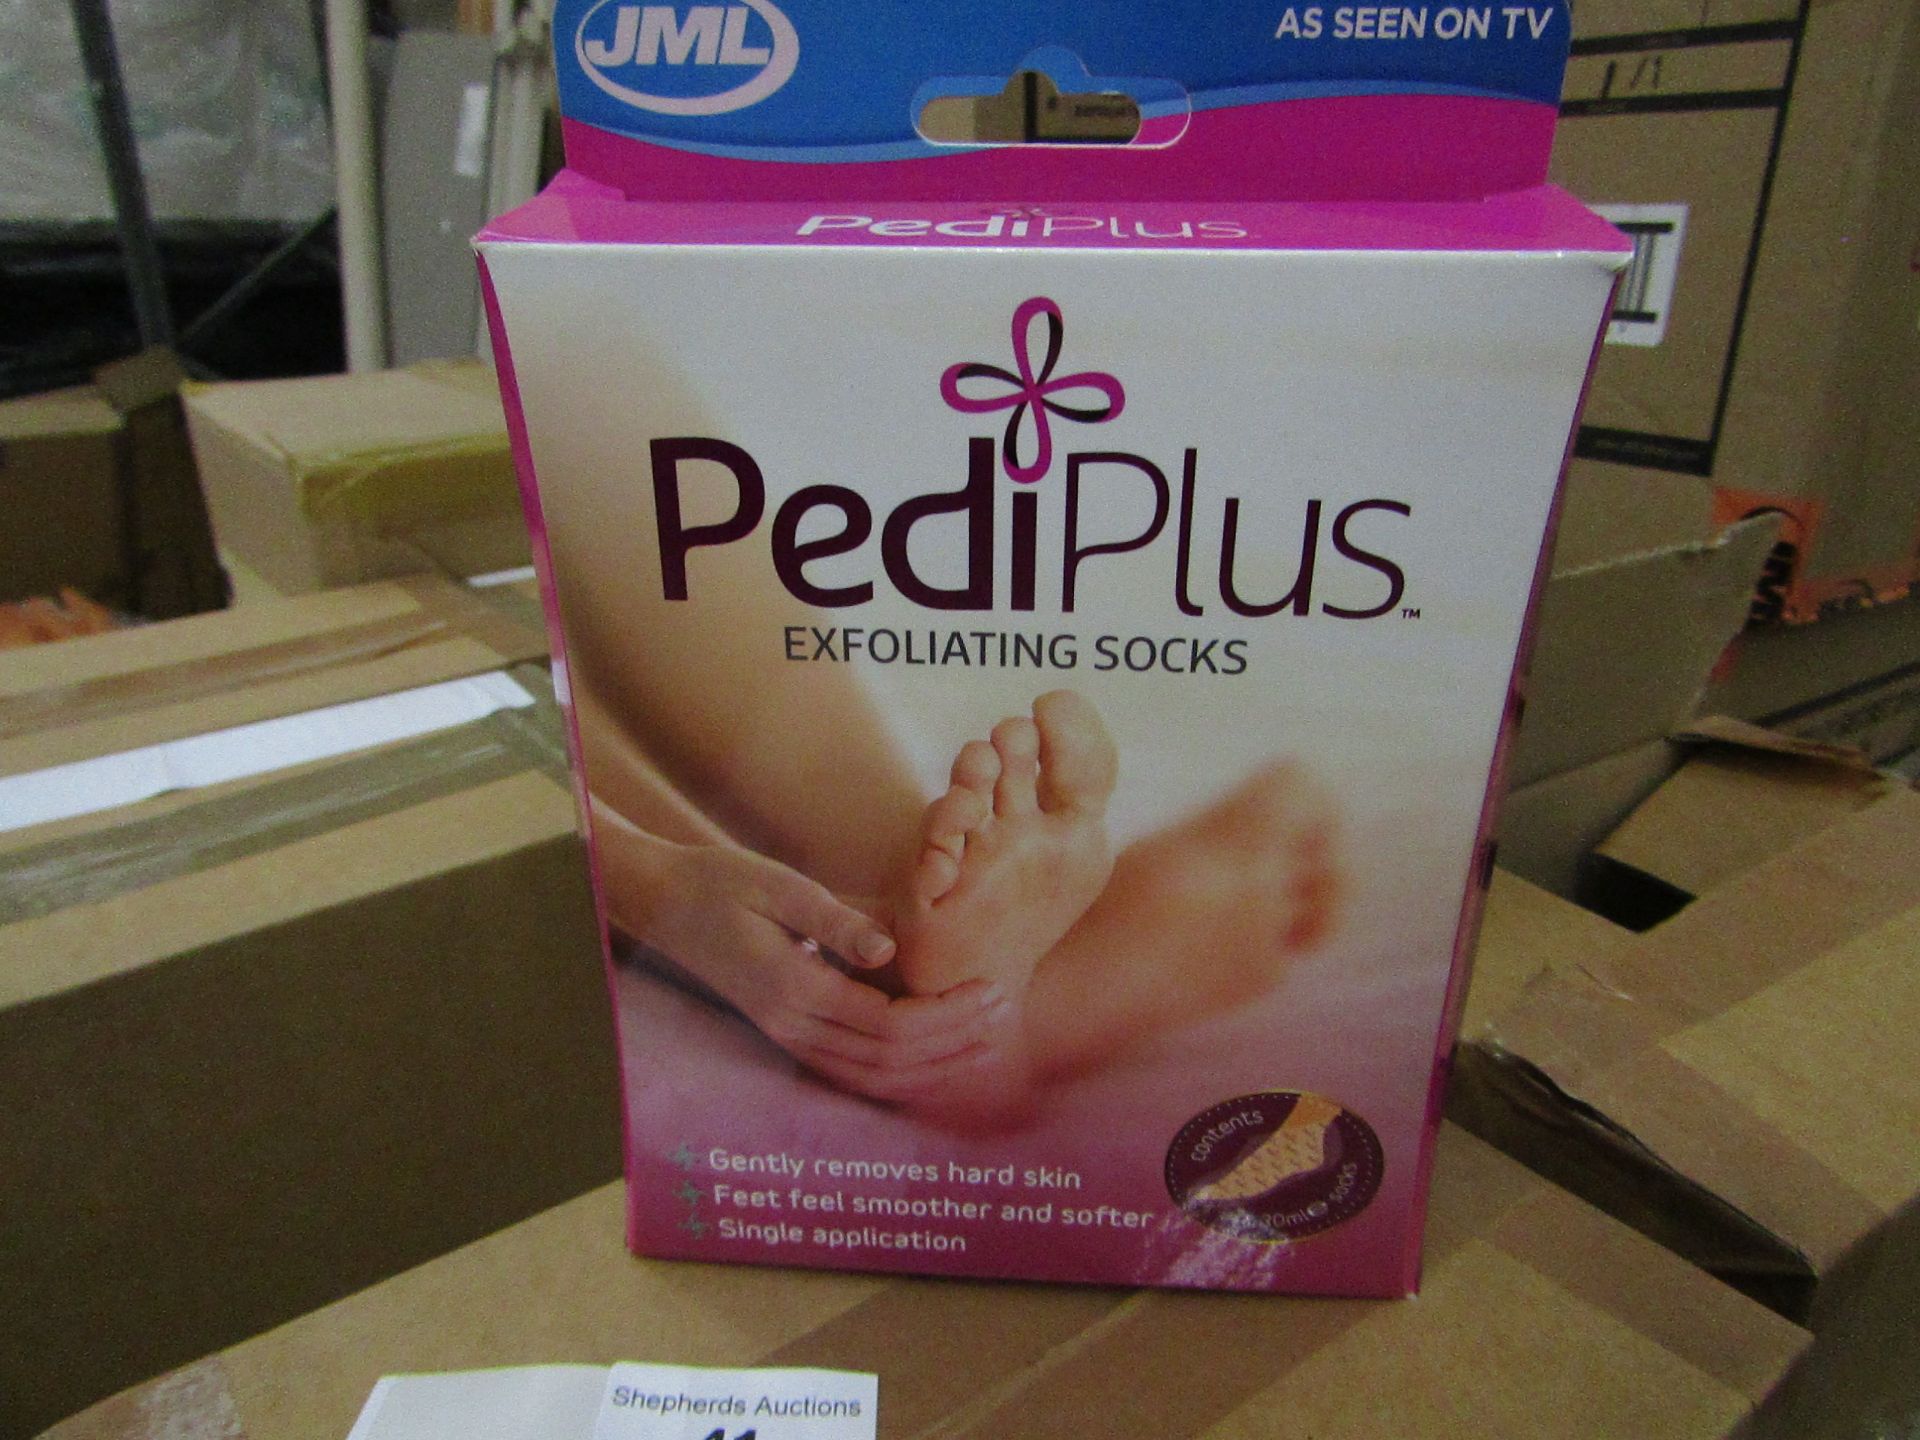 6x JML Pedi Plus Exfoliating Socks - New & Boxed.